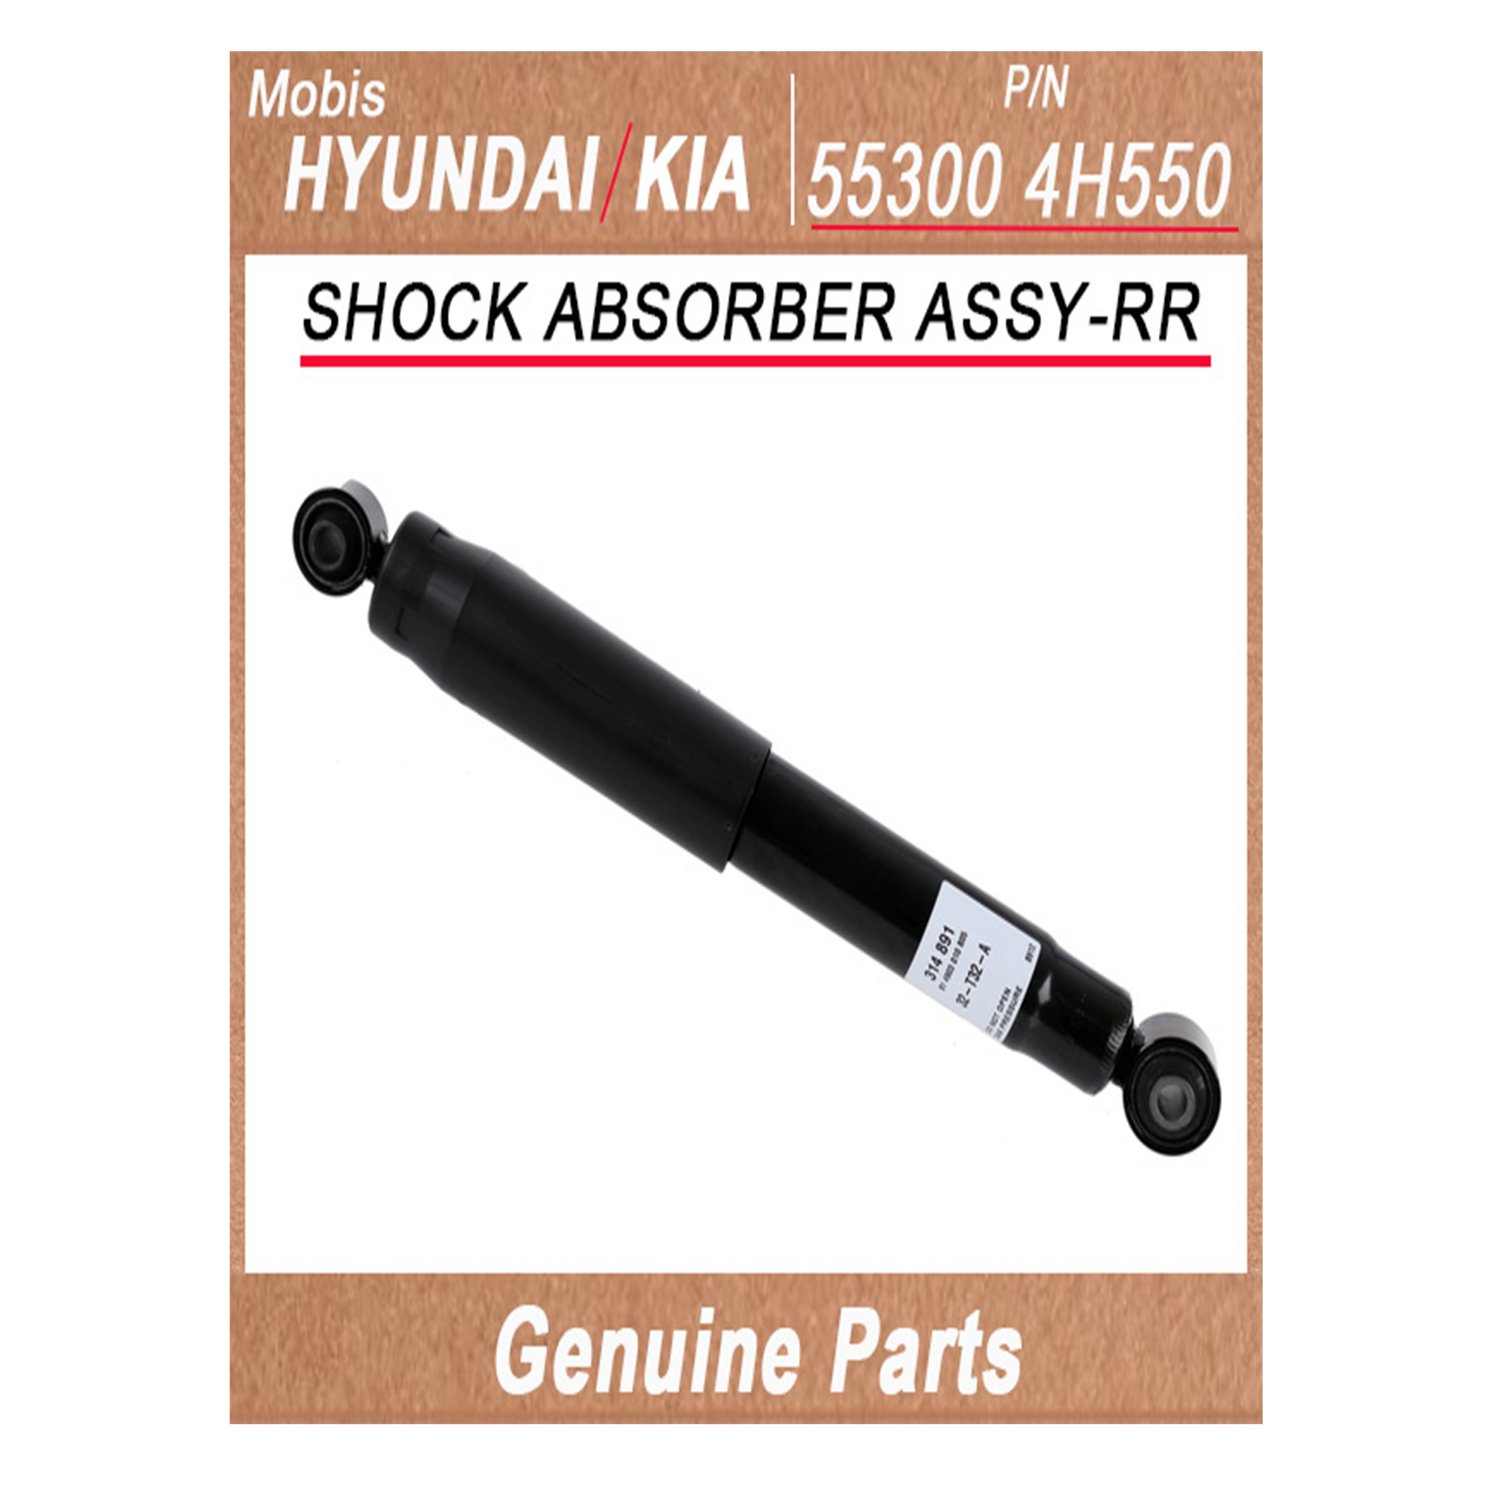 553004H550 _ SHOCK ABSORBER ASSY_RR _ Genuine Korean Automotive Spare Parts _ Hyundai Kia _Mobis_